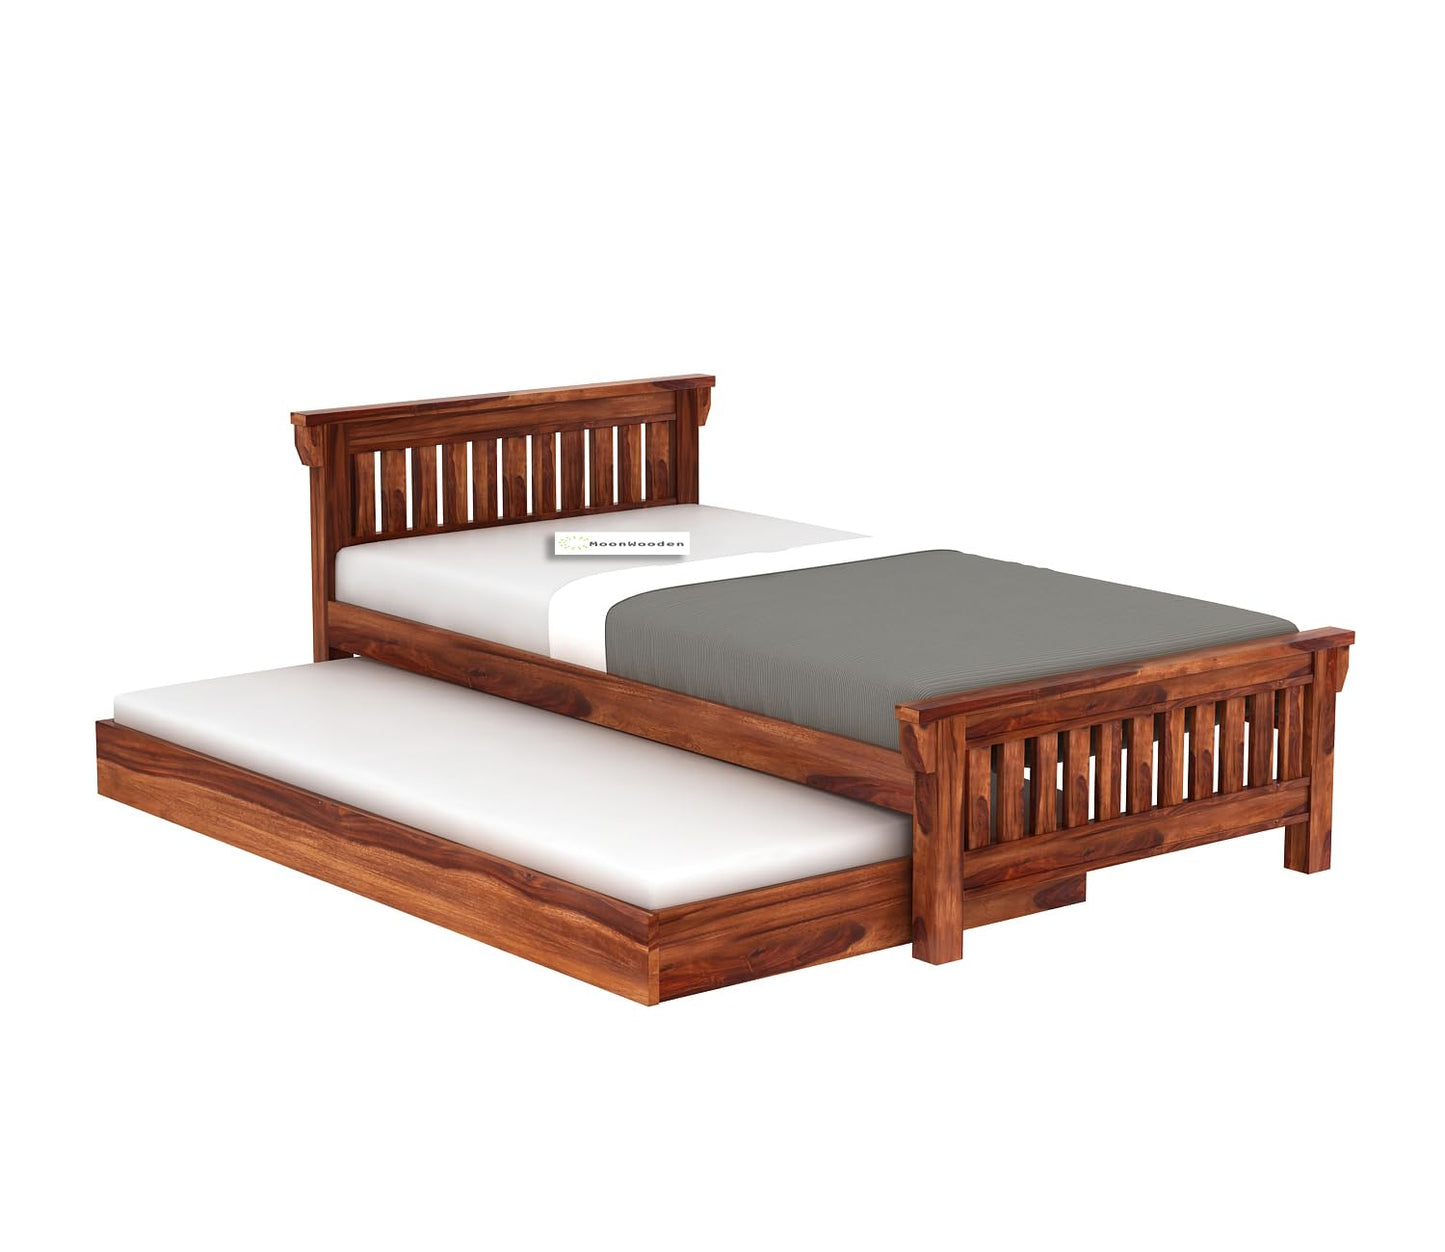 MoonWooden Solid Sheesham Wood Single Bed with Drawer Storage - Elegant and Functional Bedroom Furniture (Honey Finish)